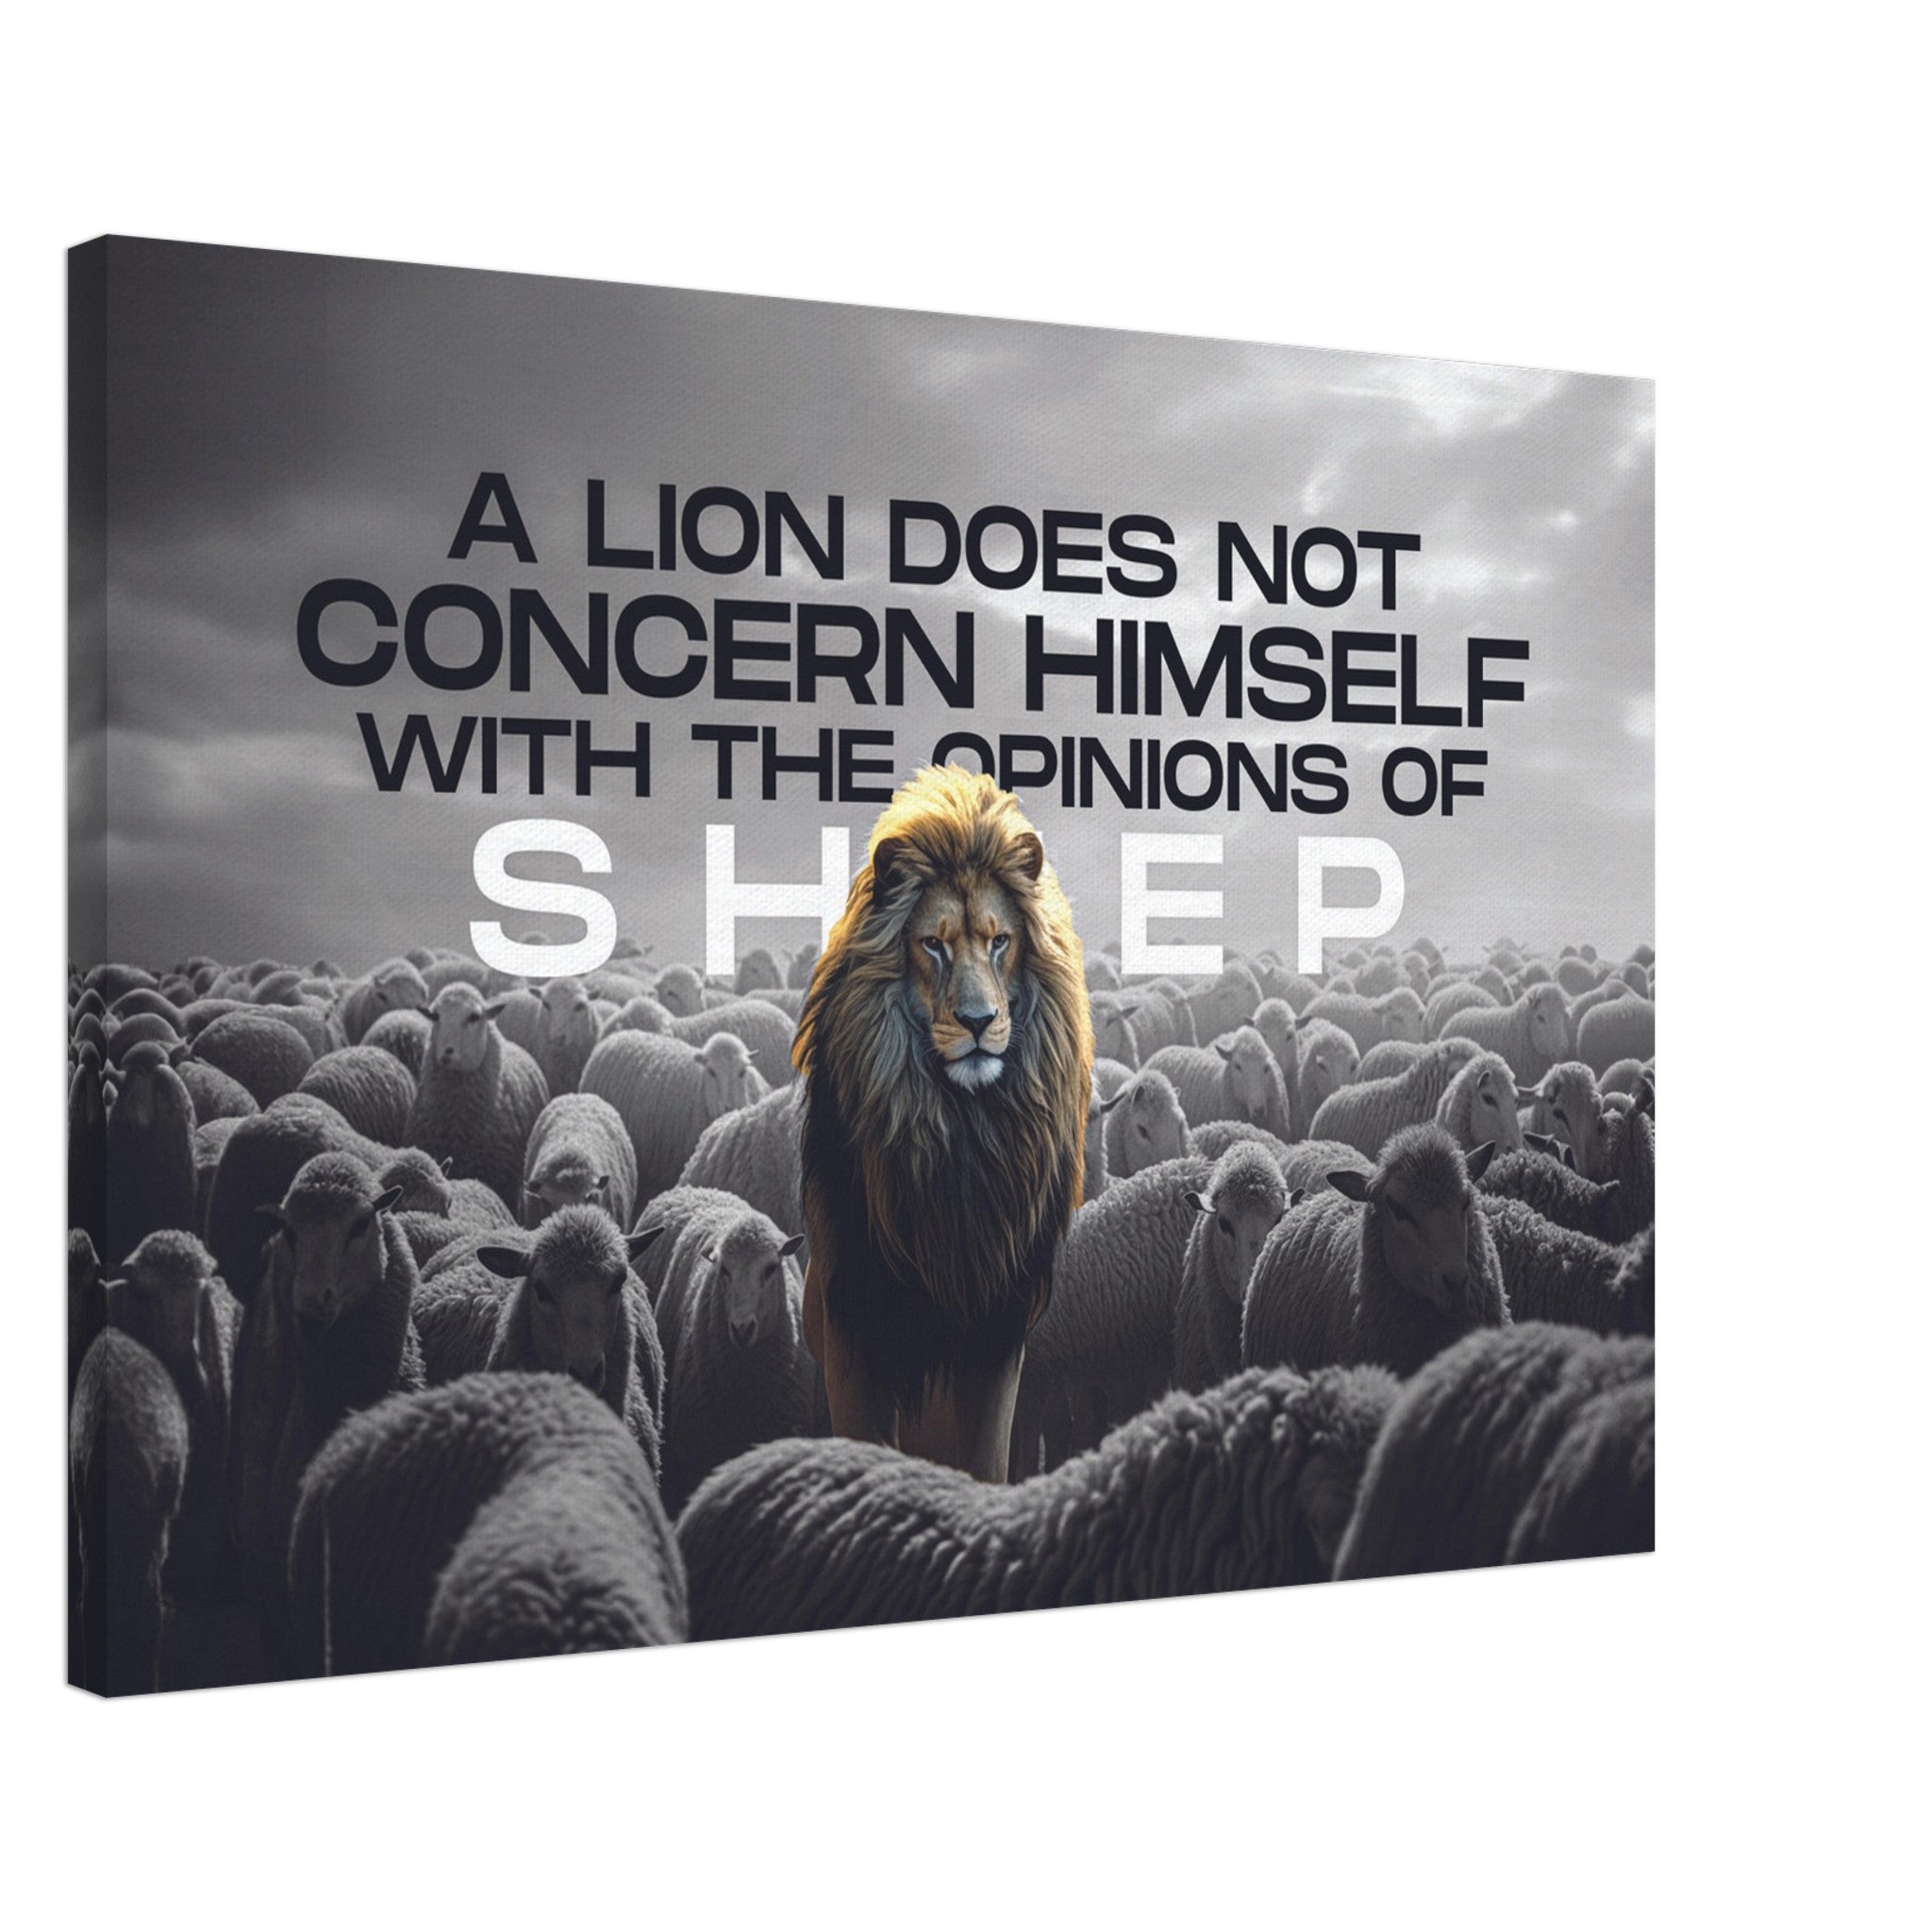 Lion and Sheep